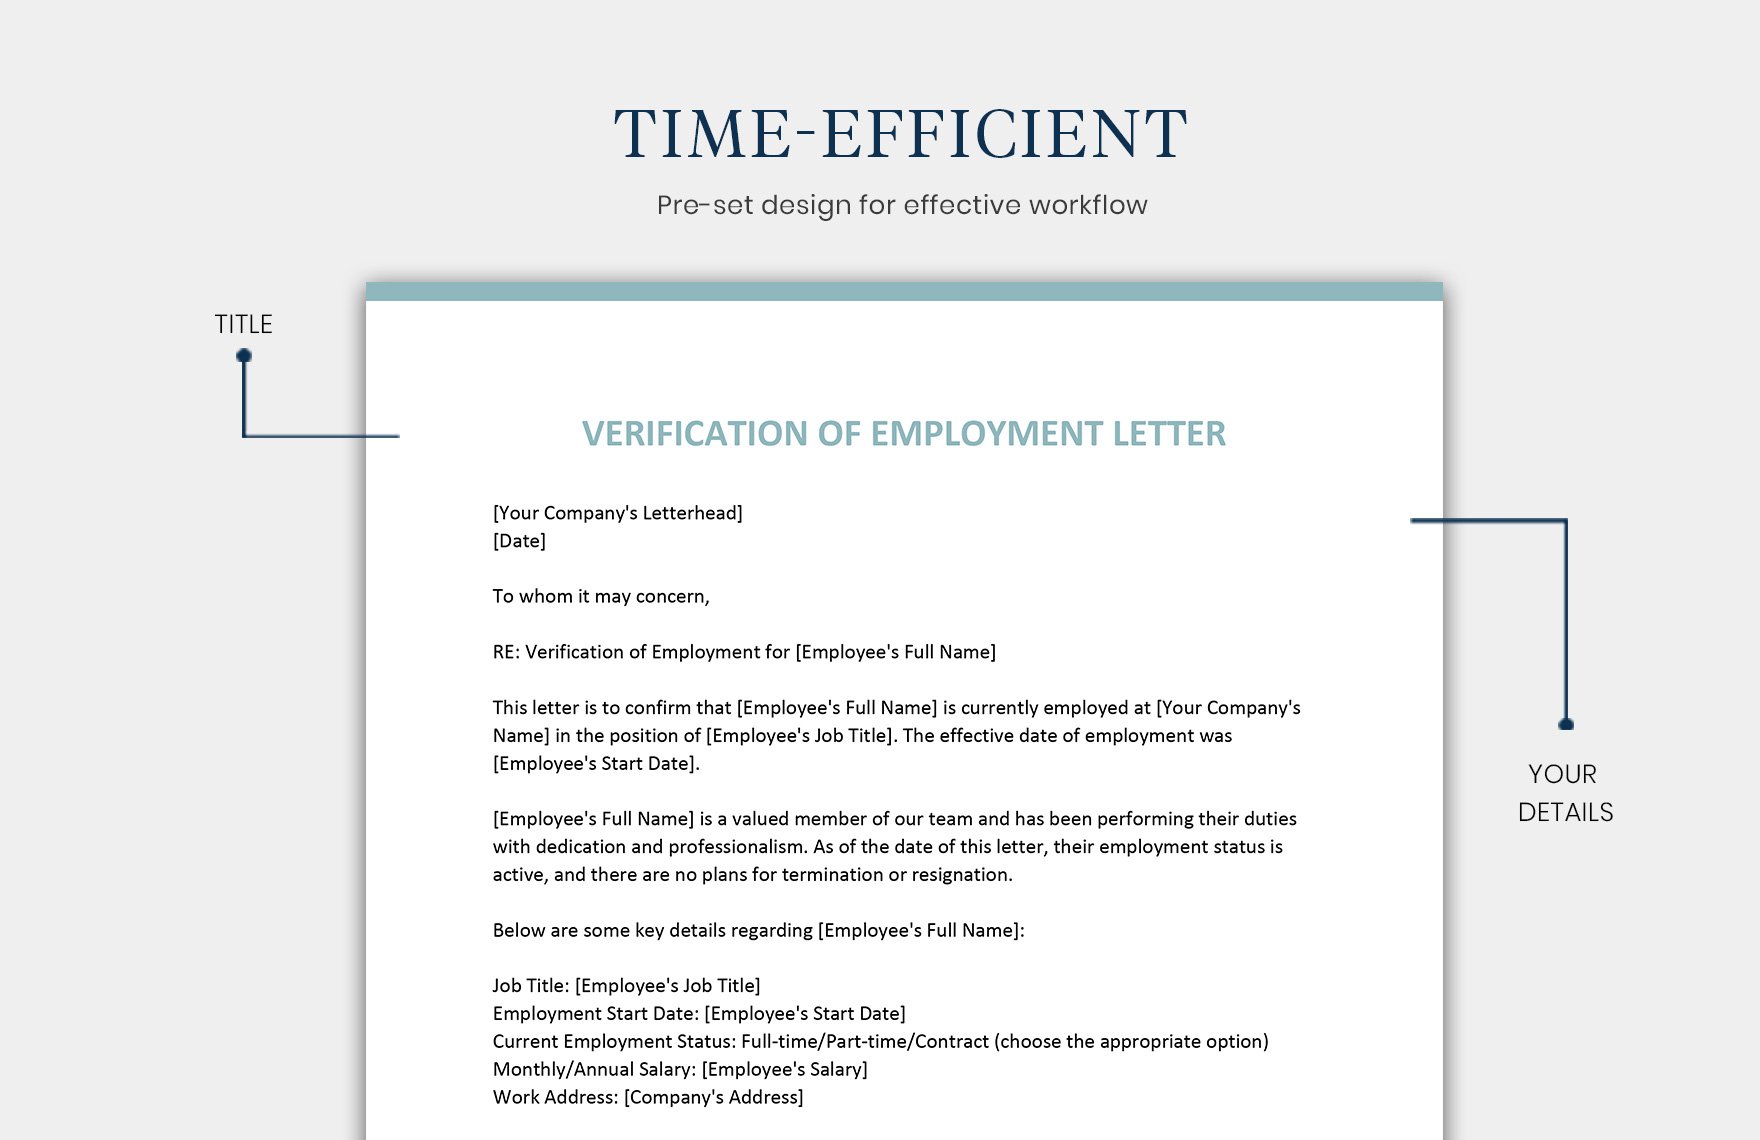 Verification of Employment Letter